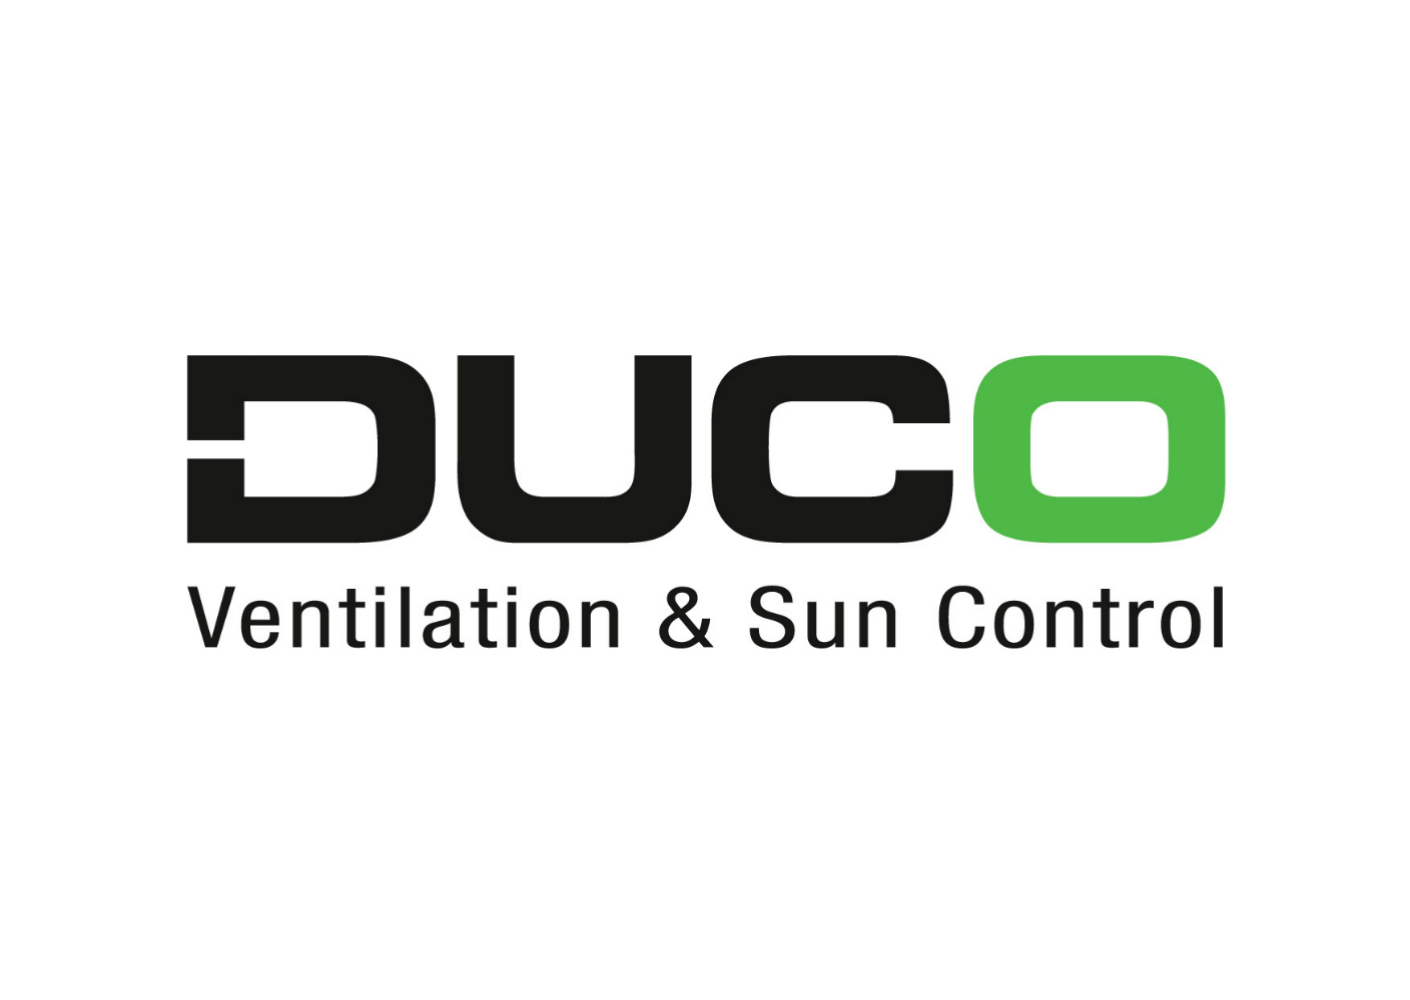 Logo Duco Ventilation & Sun Control